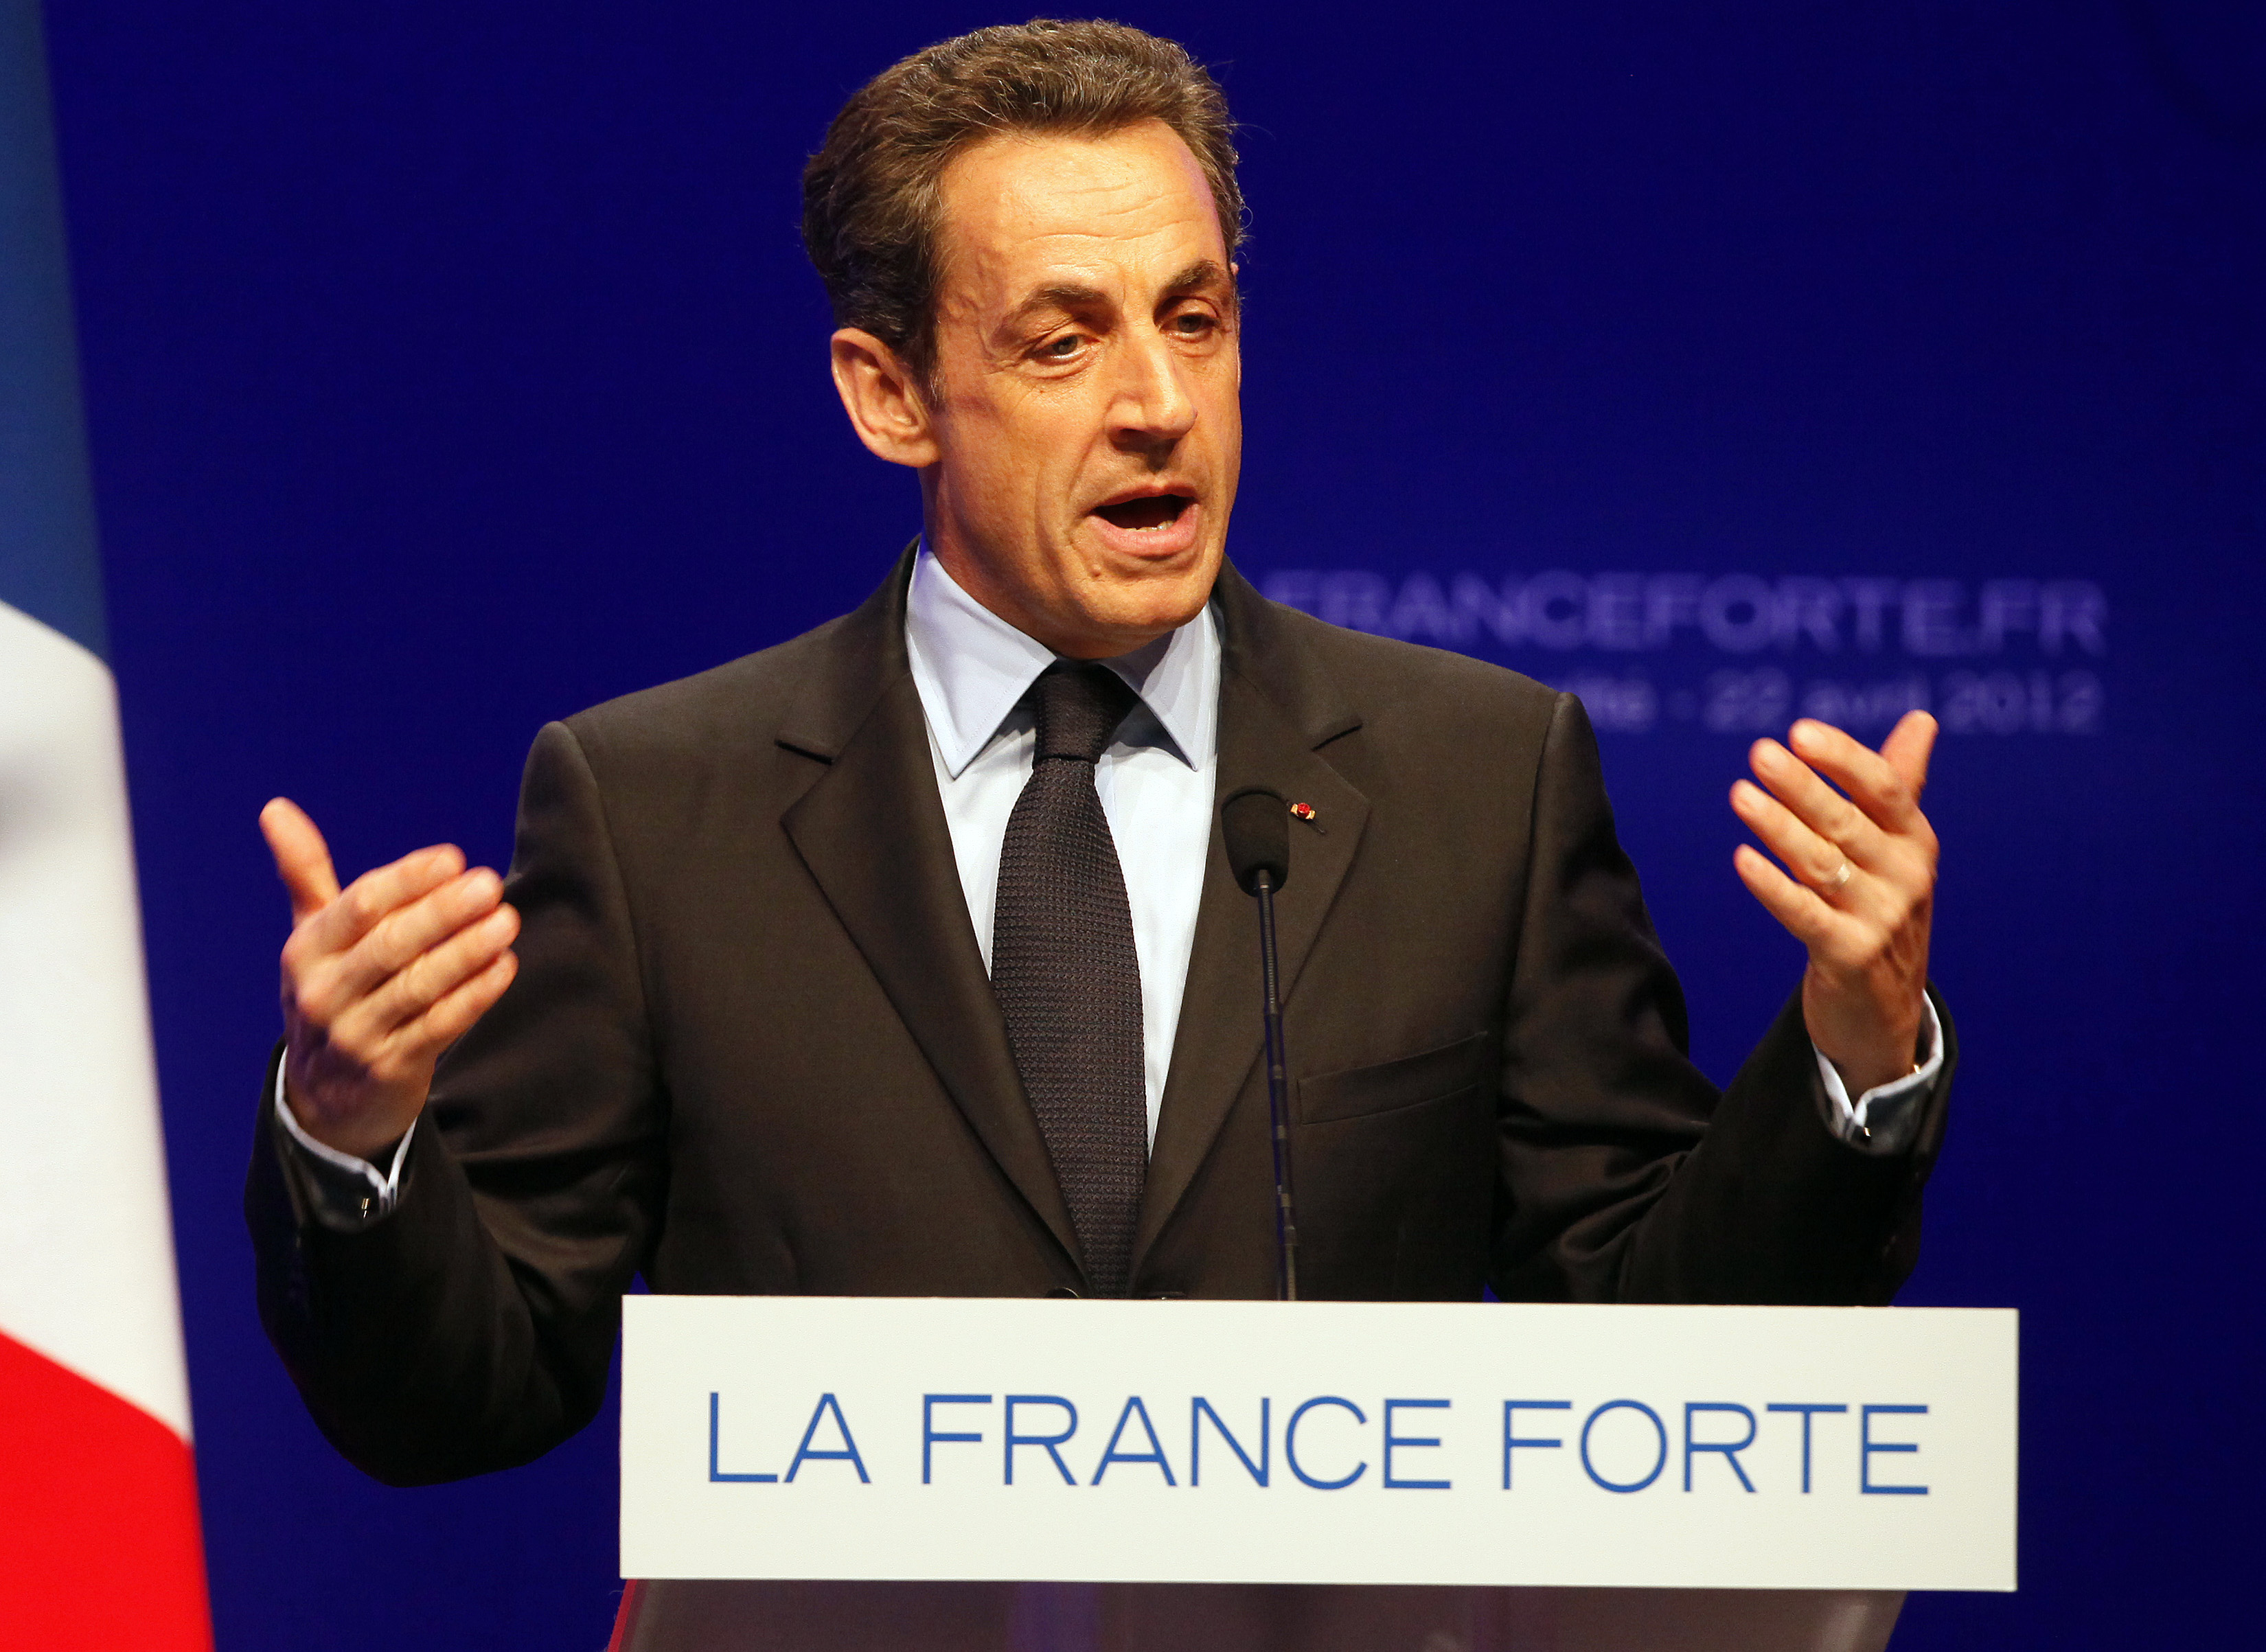 Politik, Nicolas Sarkozy, Front National, Presidentvalet, Le Pen, Frankrike, Islamofobi, François Hollande, Brott och straff, Marine Le Pen, Val